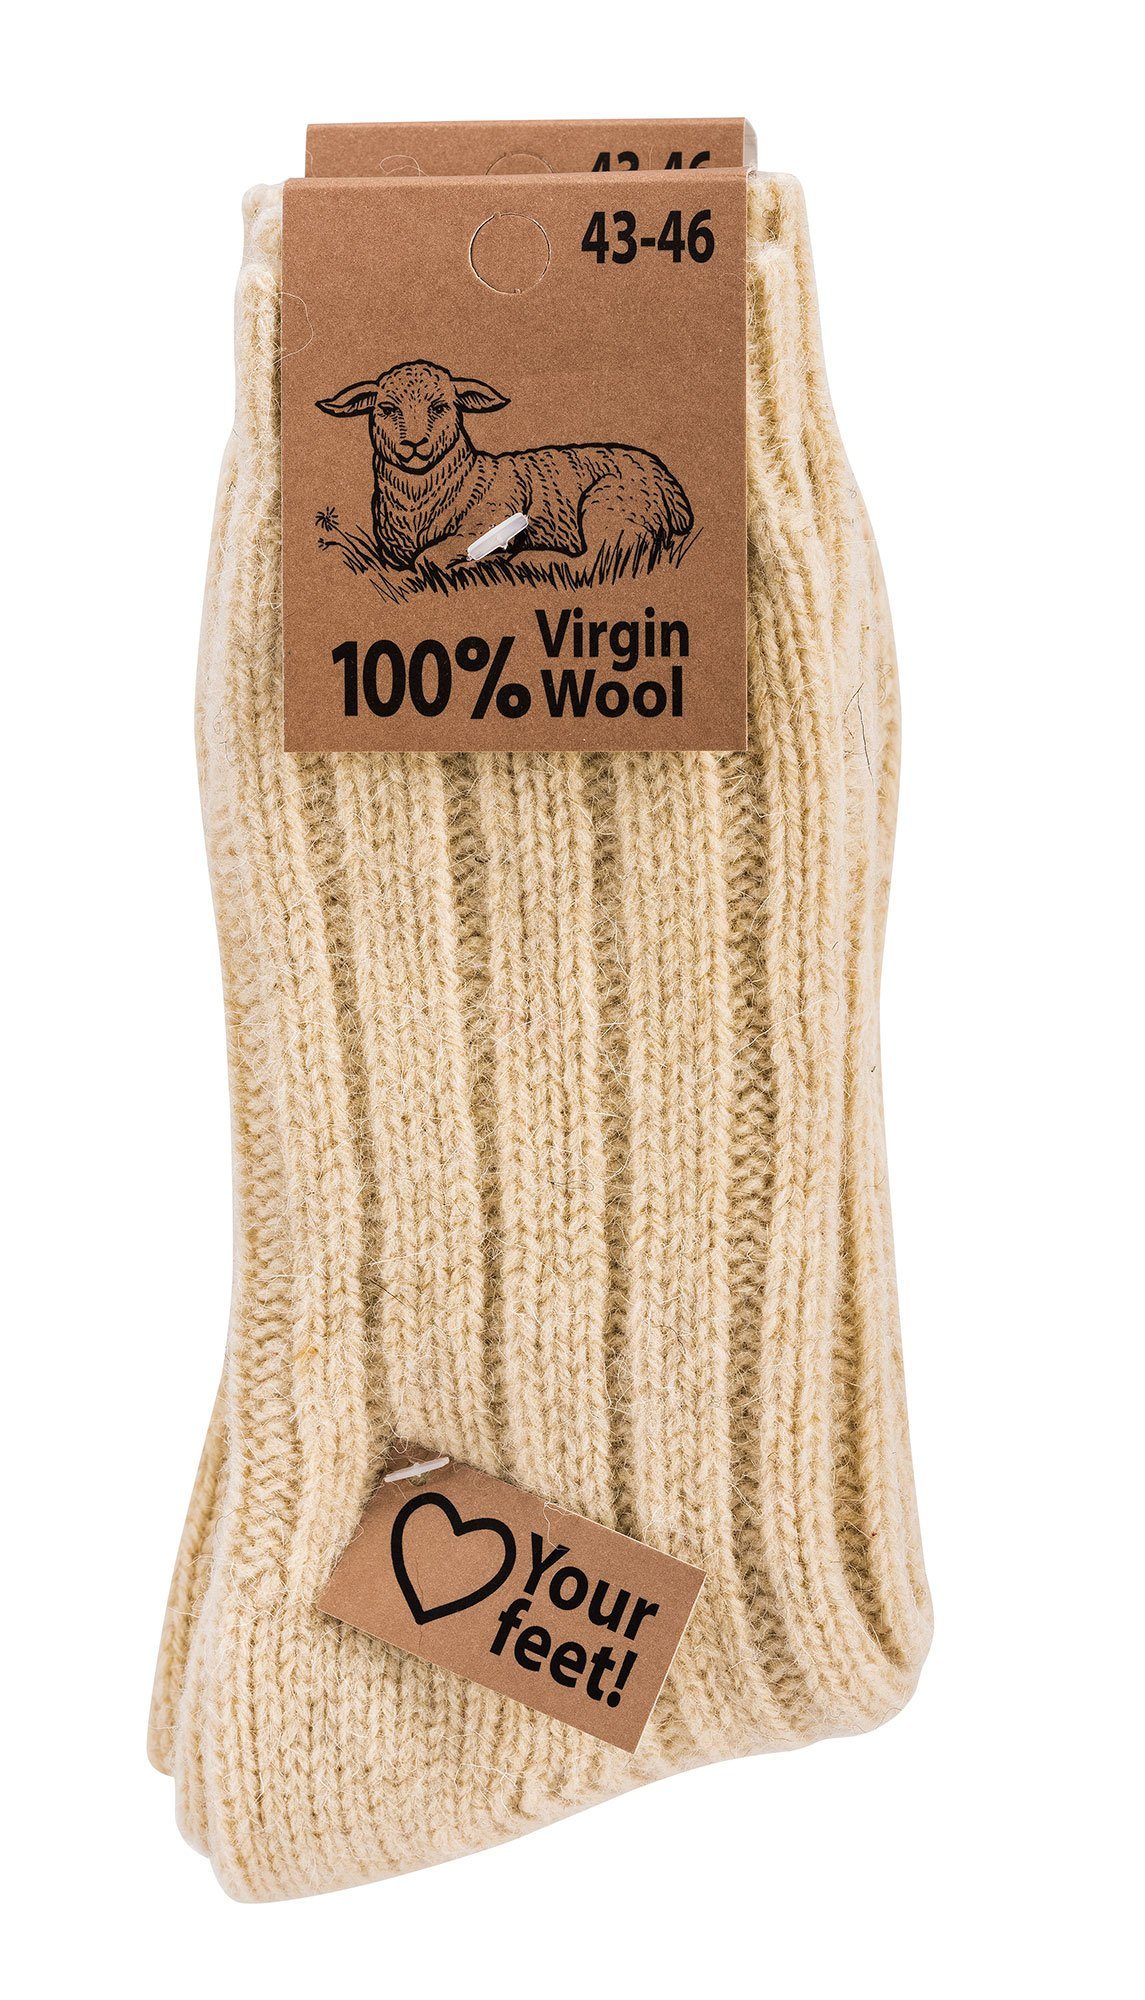 Socken Grobstrick natur Paar) Wowerat (2 Wool" Socks "Virgin Wollsocken 100% Fun Schafwolle 4 Warme